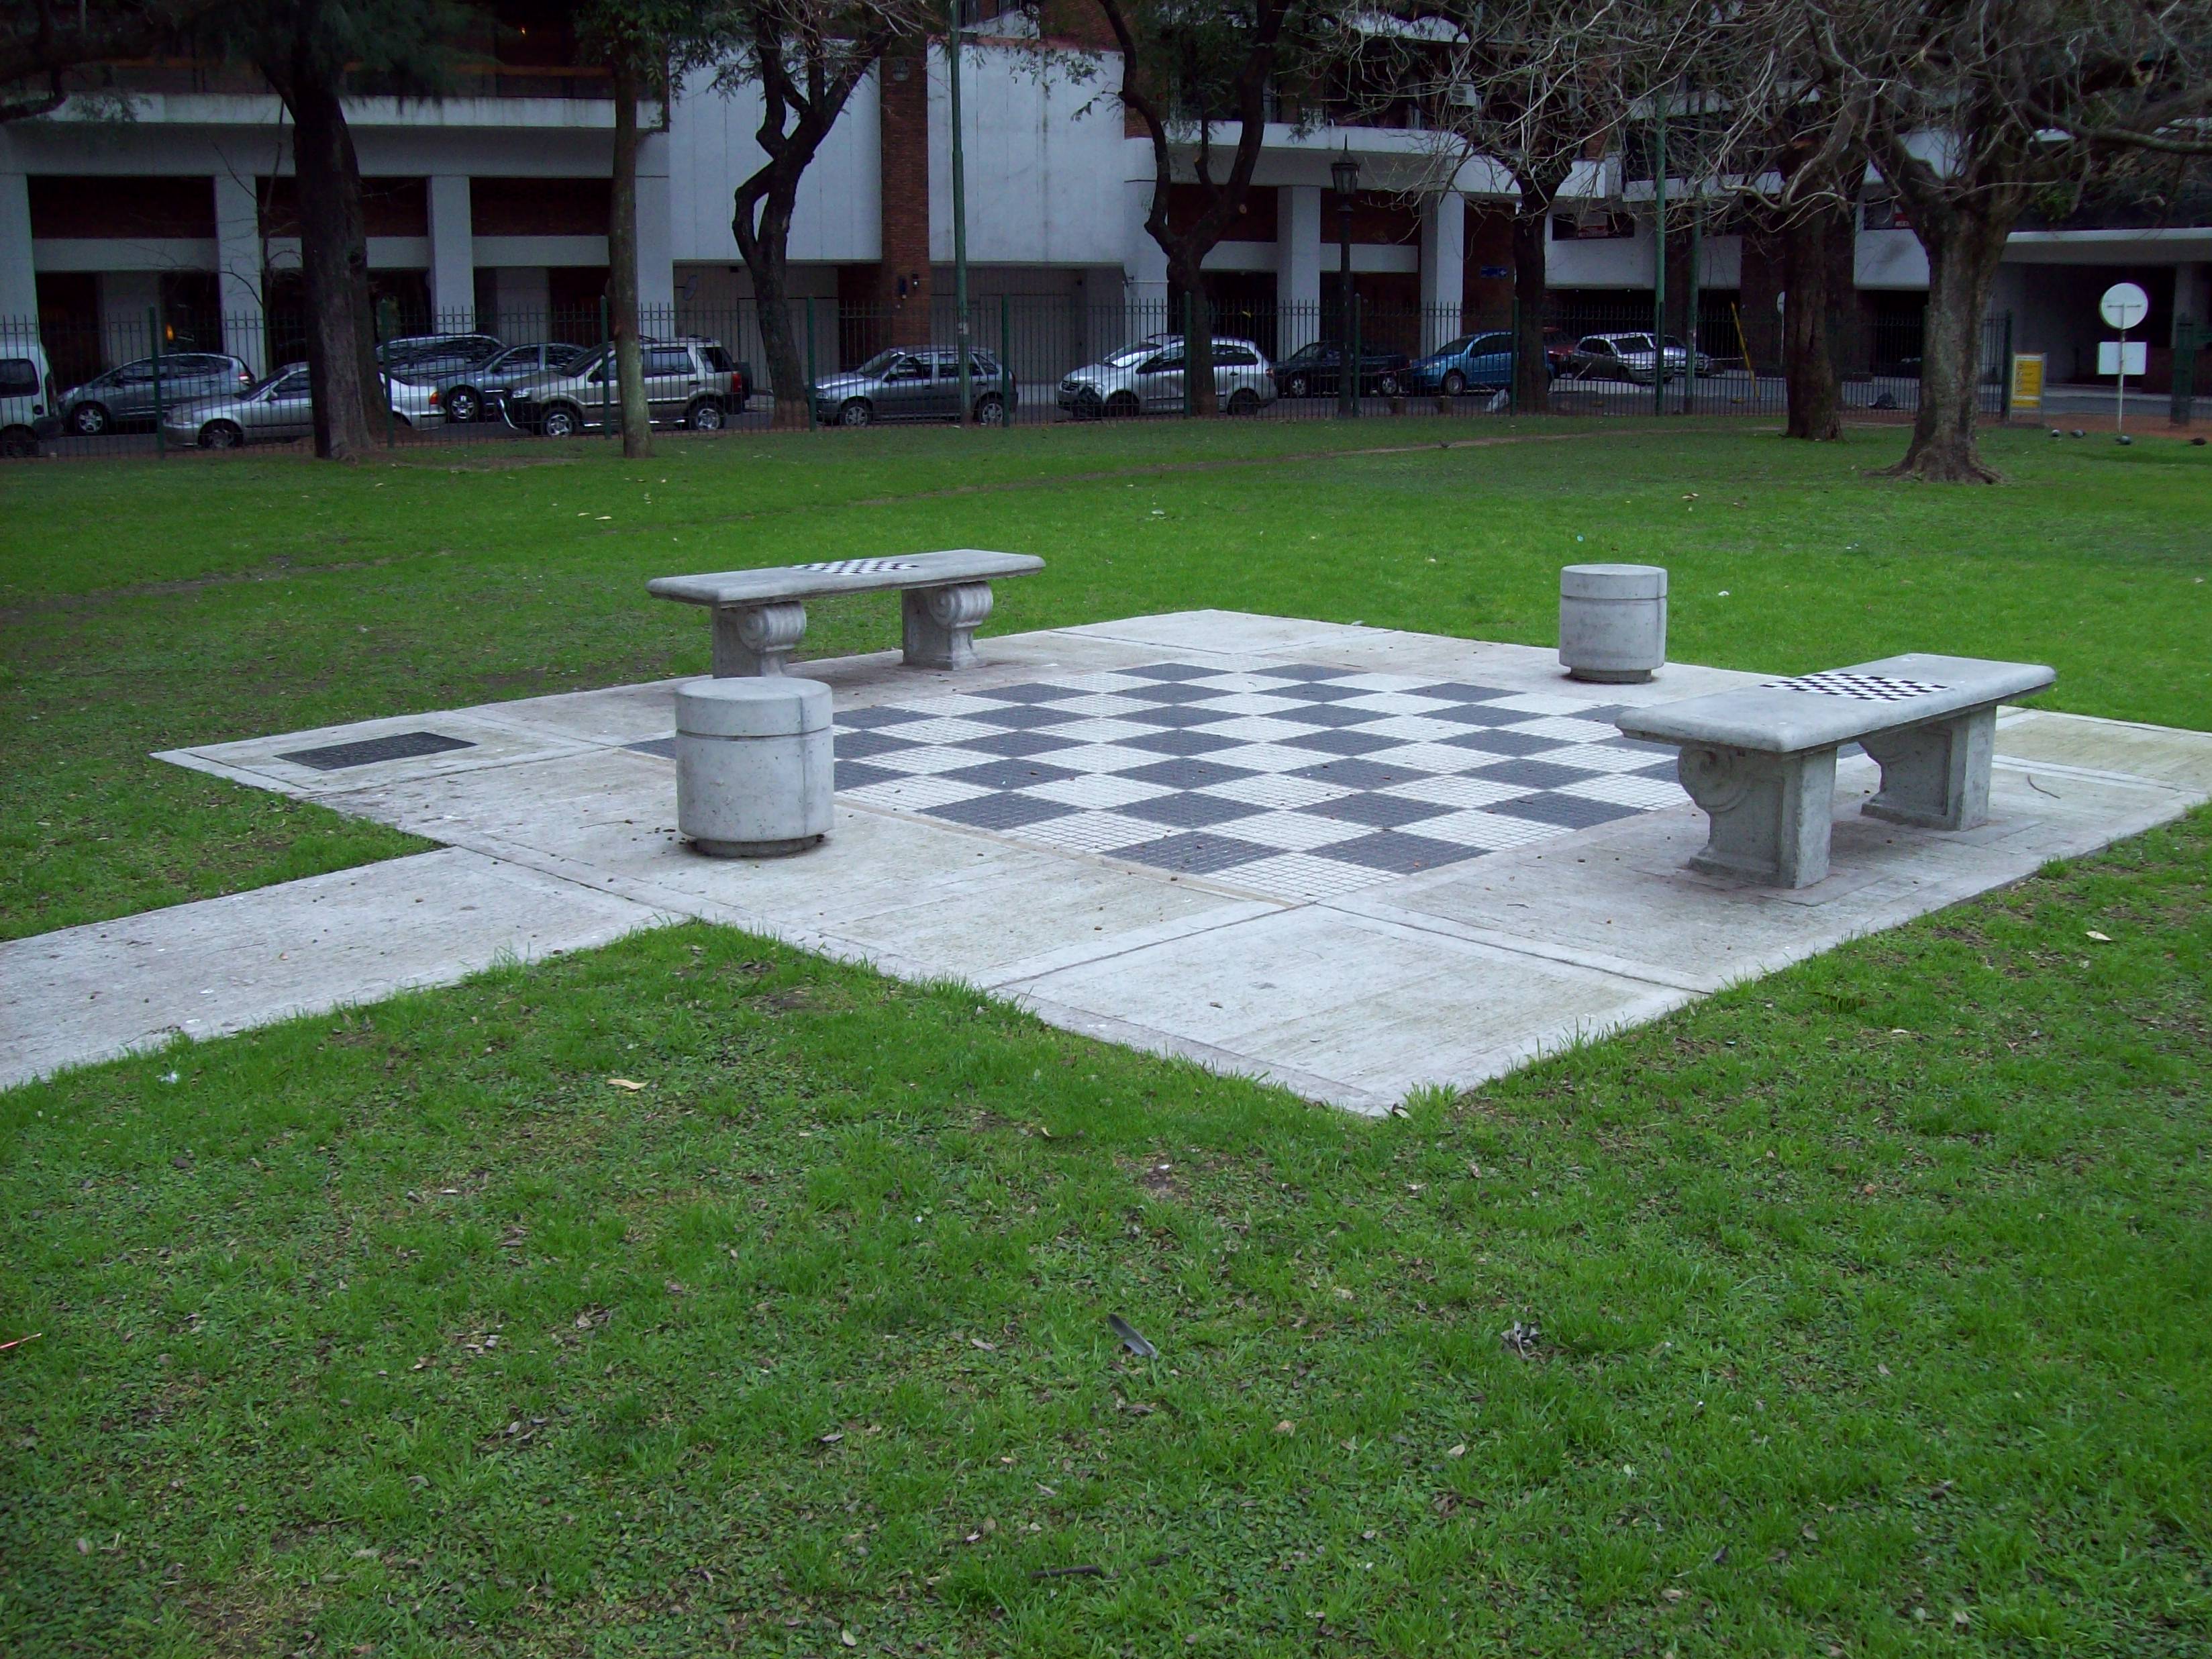 File:Tablero gigante de ajedrez.jpg - Wikimedia Commons